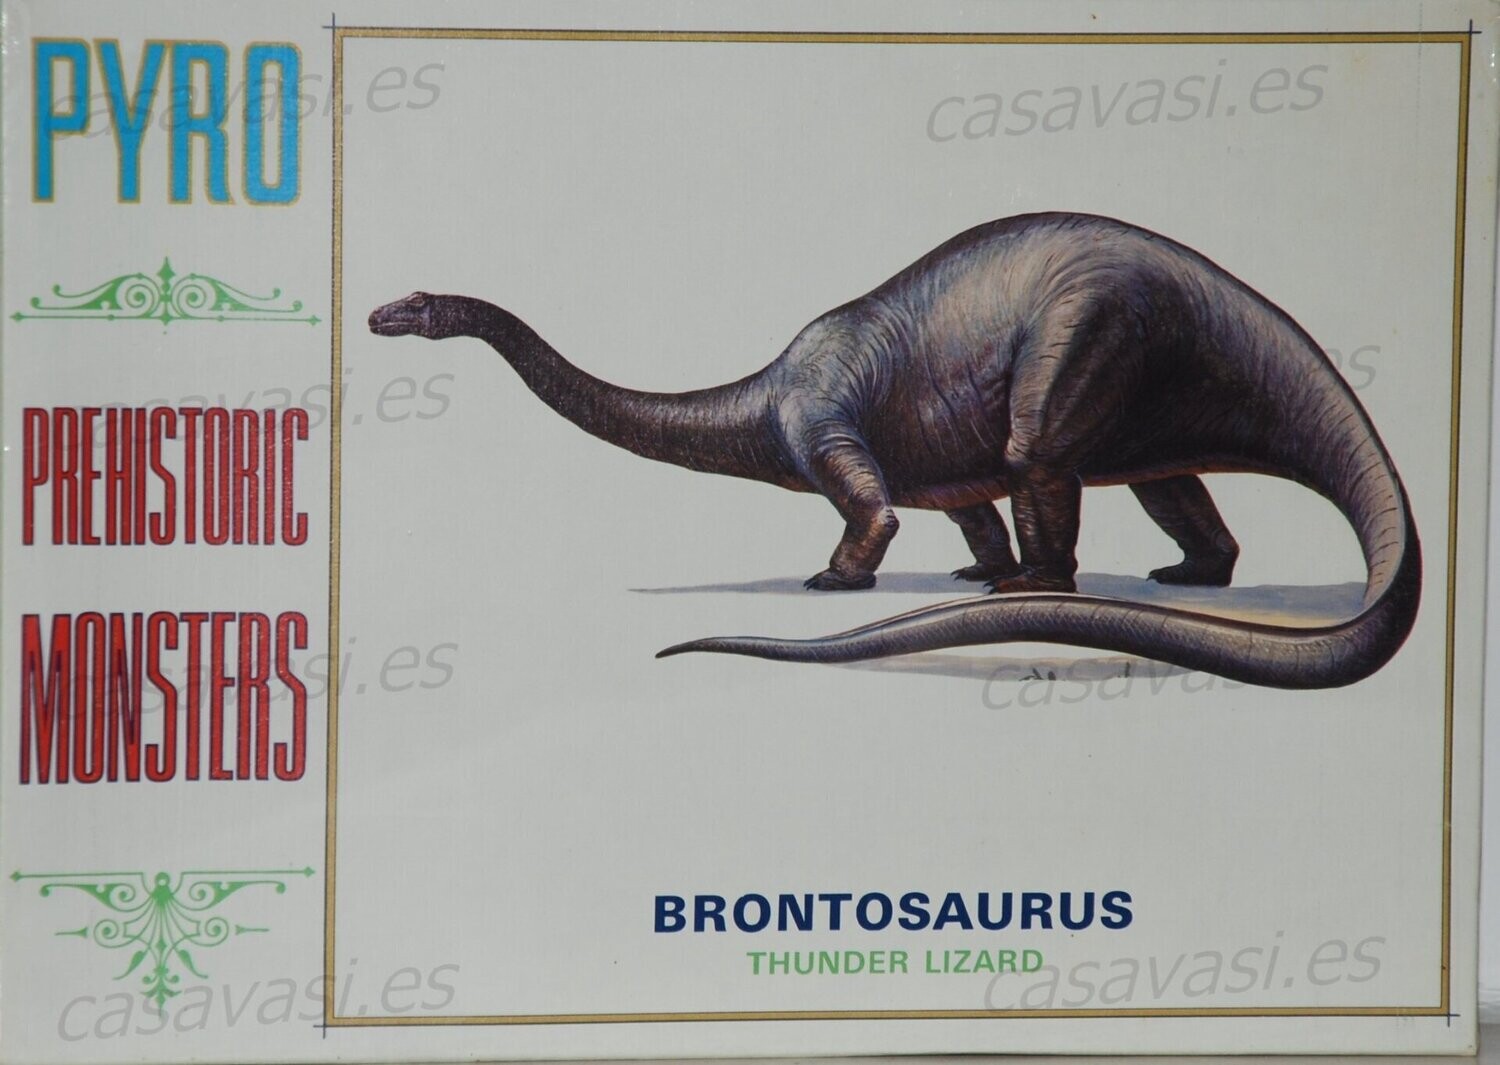 Pyro - d275-100 - Nº3 - Brontosaurus - Thunder Lizard
Box Size 25 x 18 cm.